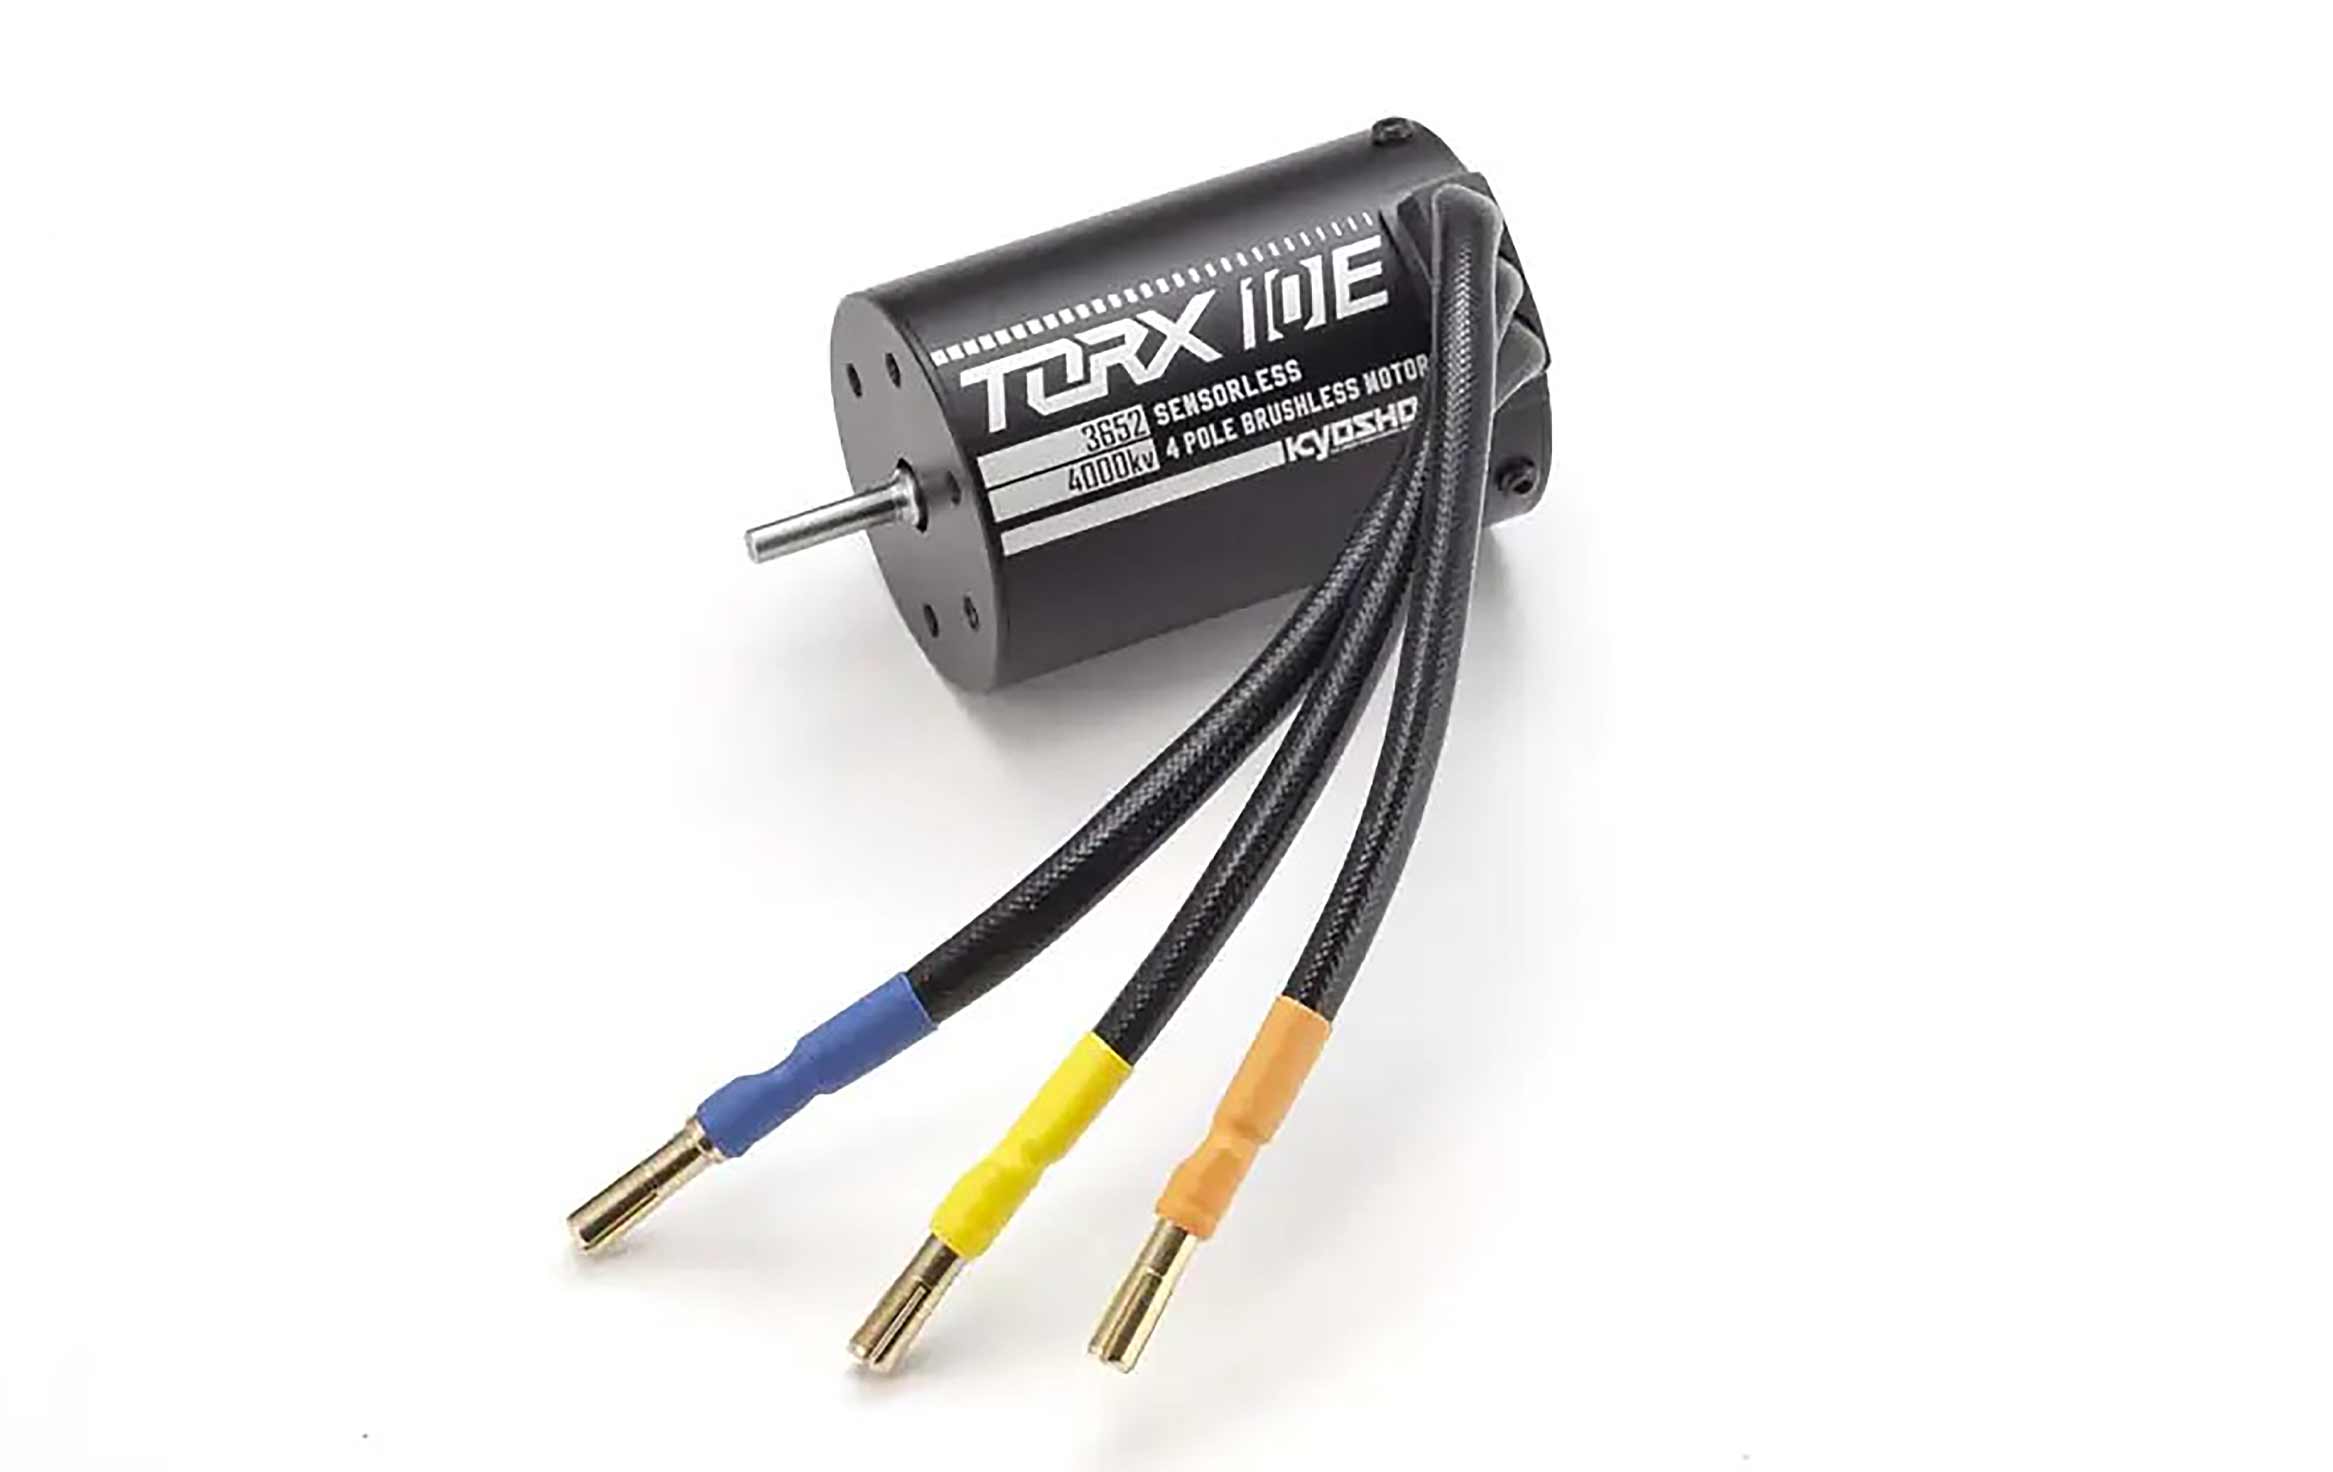 TORX 10E Motor